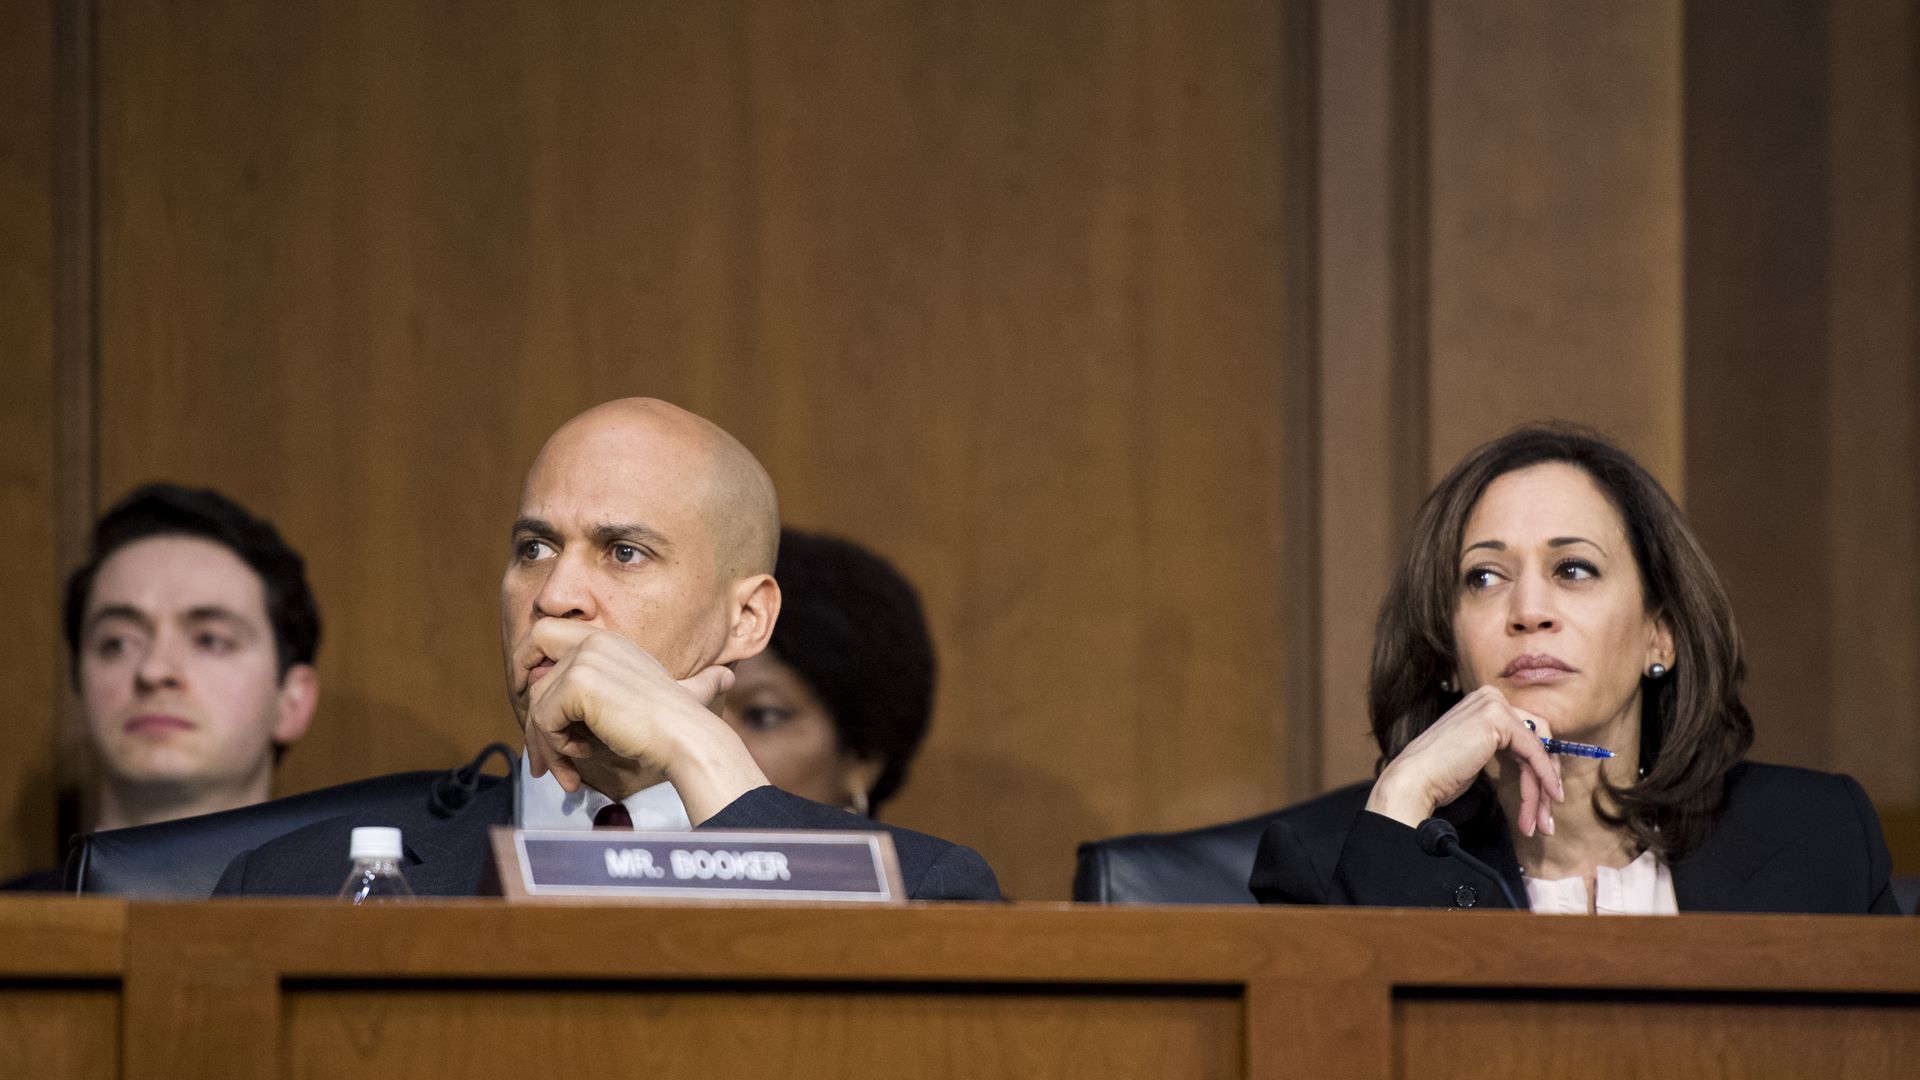 Senators Booker and Harris look stern.